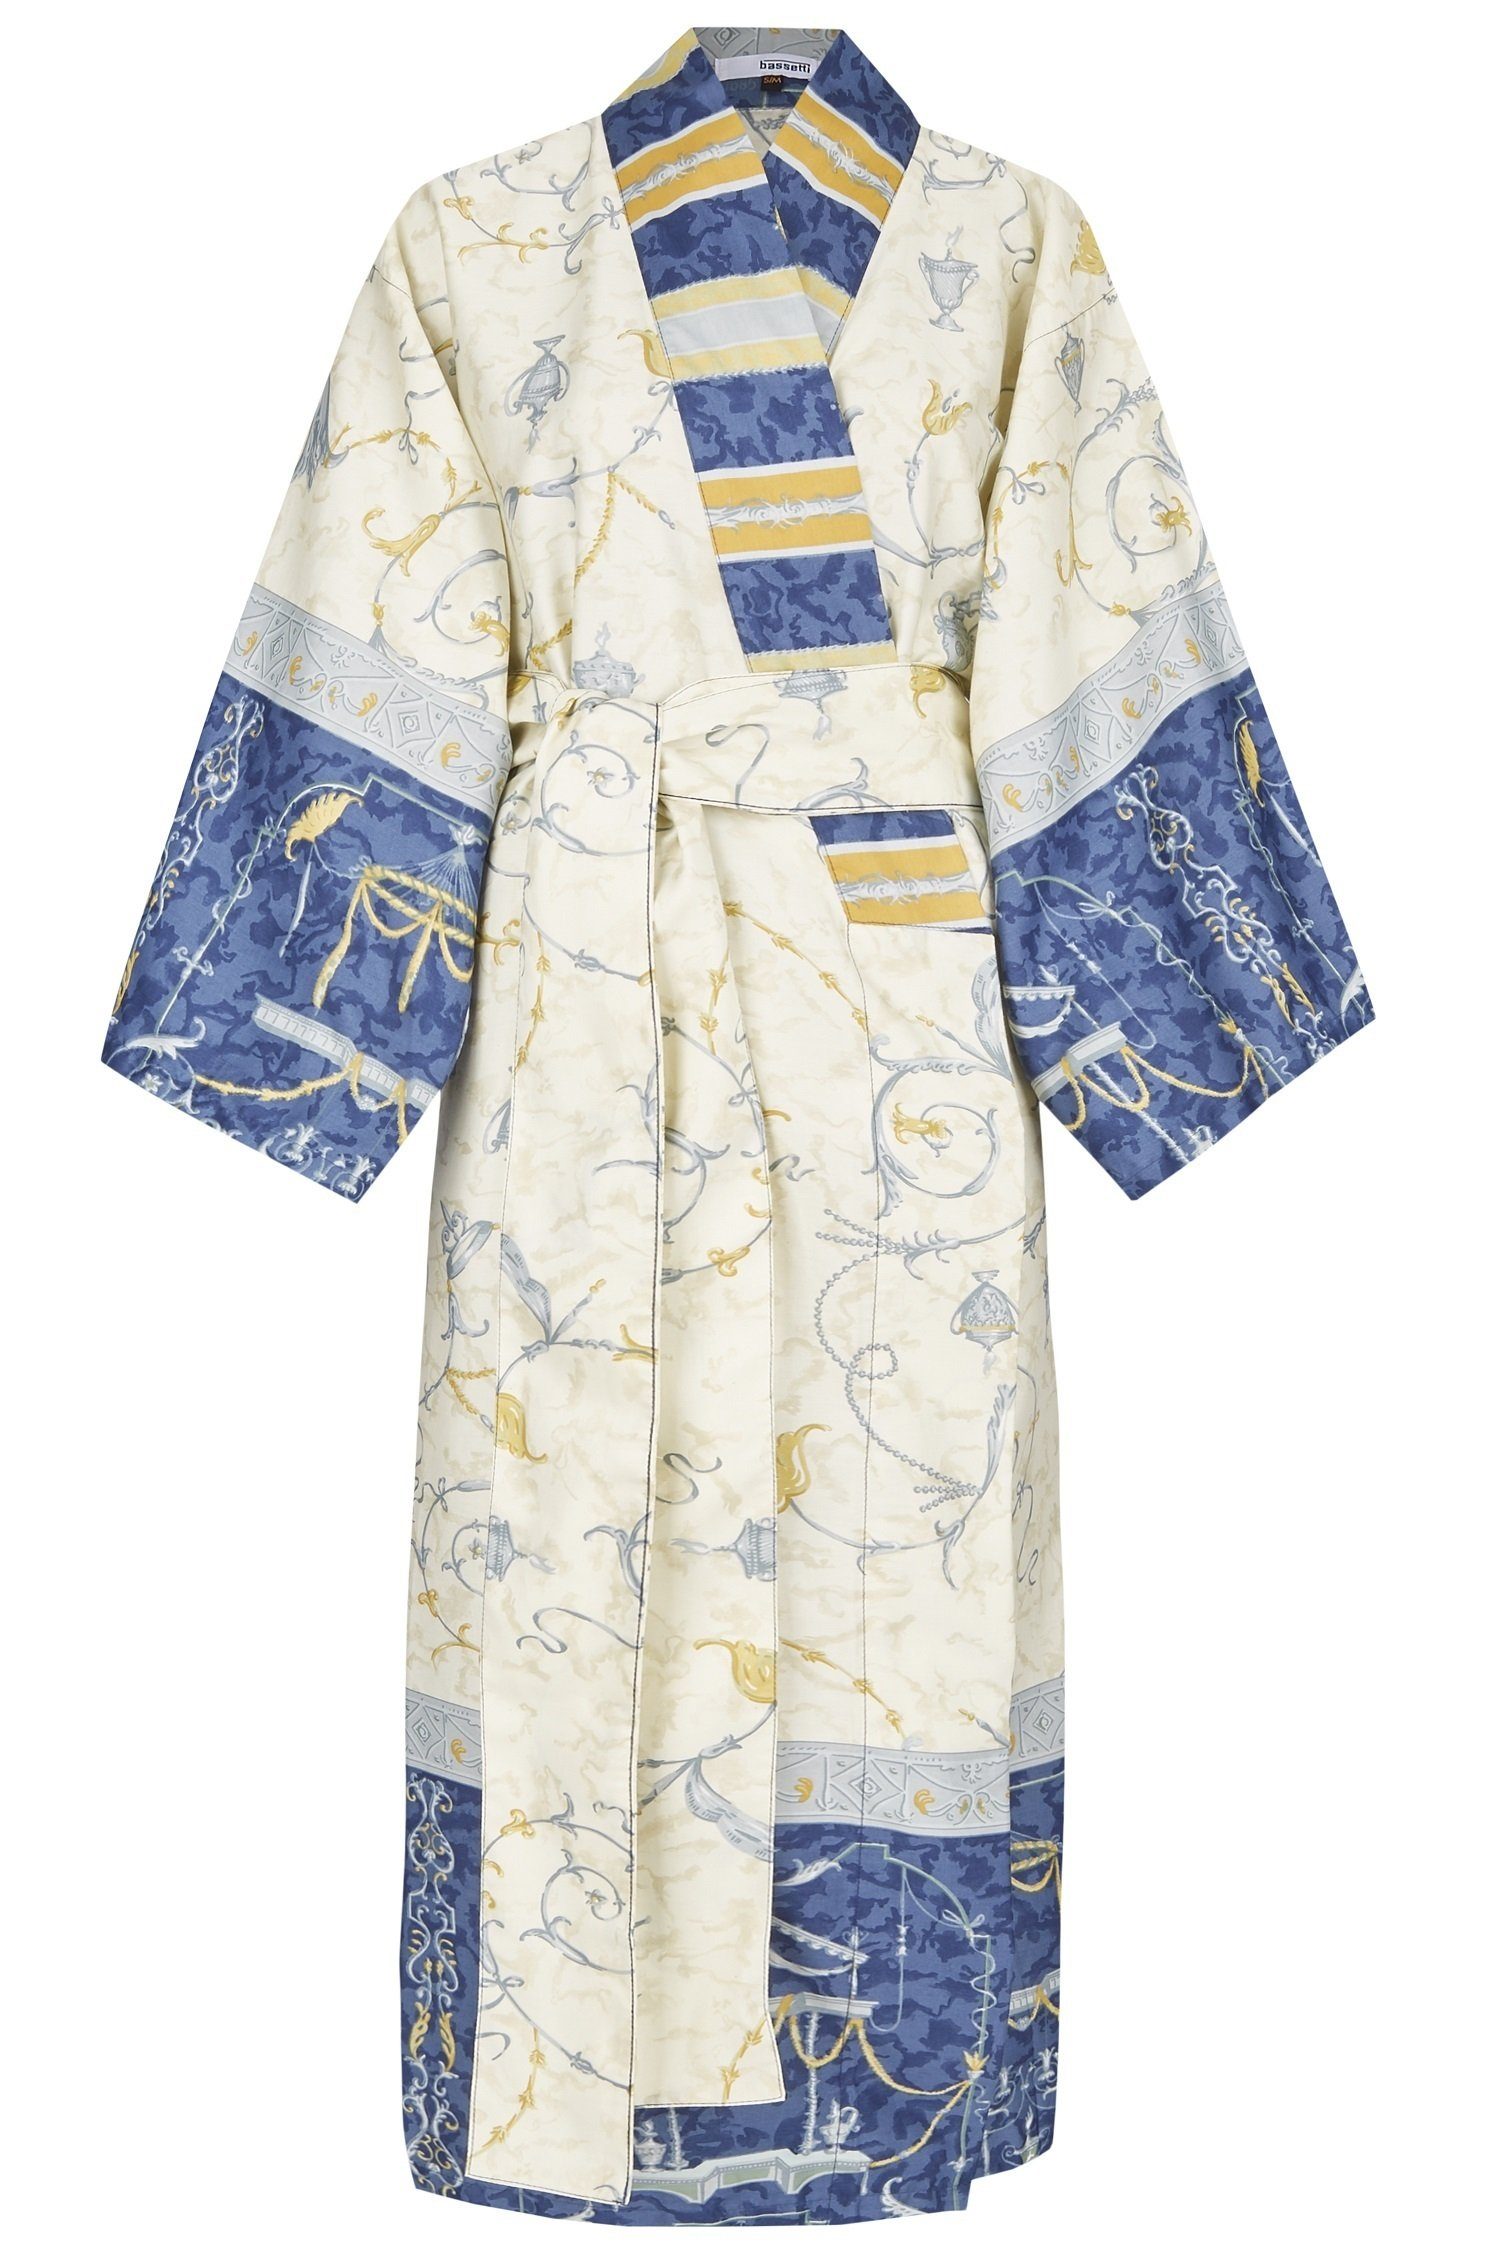 blau OPLONTIS, Bassetti Gürtel, aus Baumwolle satinierter Baumwolle, Kimono knöchelfrei,